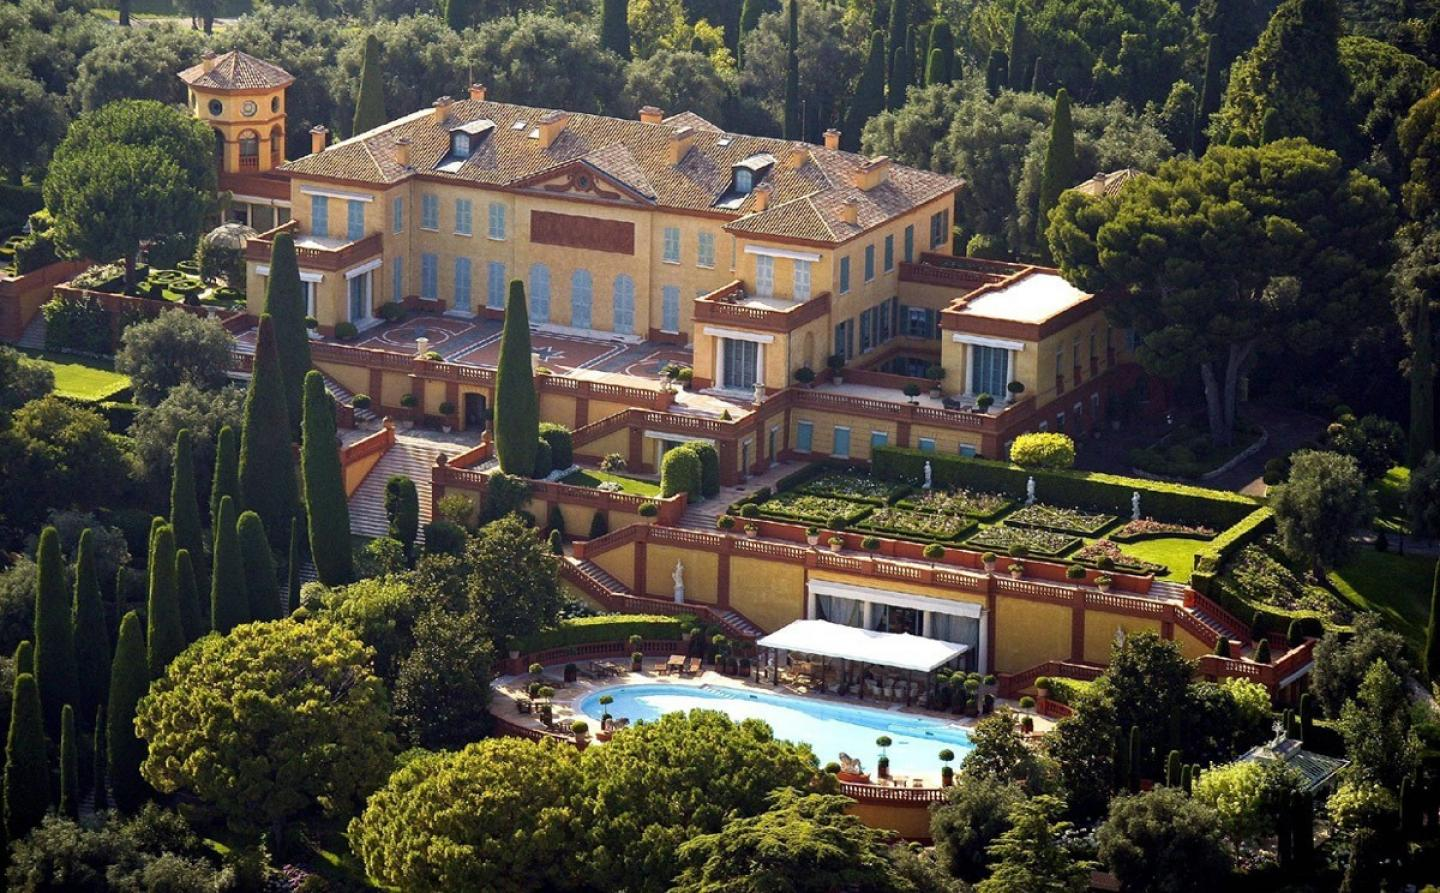 Villa Leopolda | Photo from amazing.zone | https://amazing.zone/fotosblog/max/VILLA_LEOPOLDA_3X_VISTA_A%C3%89REA_AMPLIA.jpg